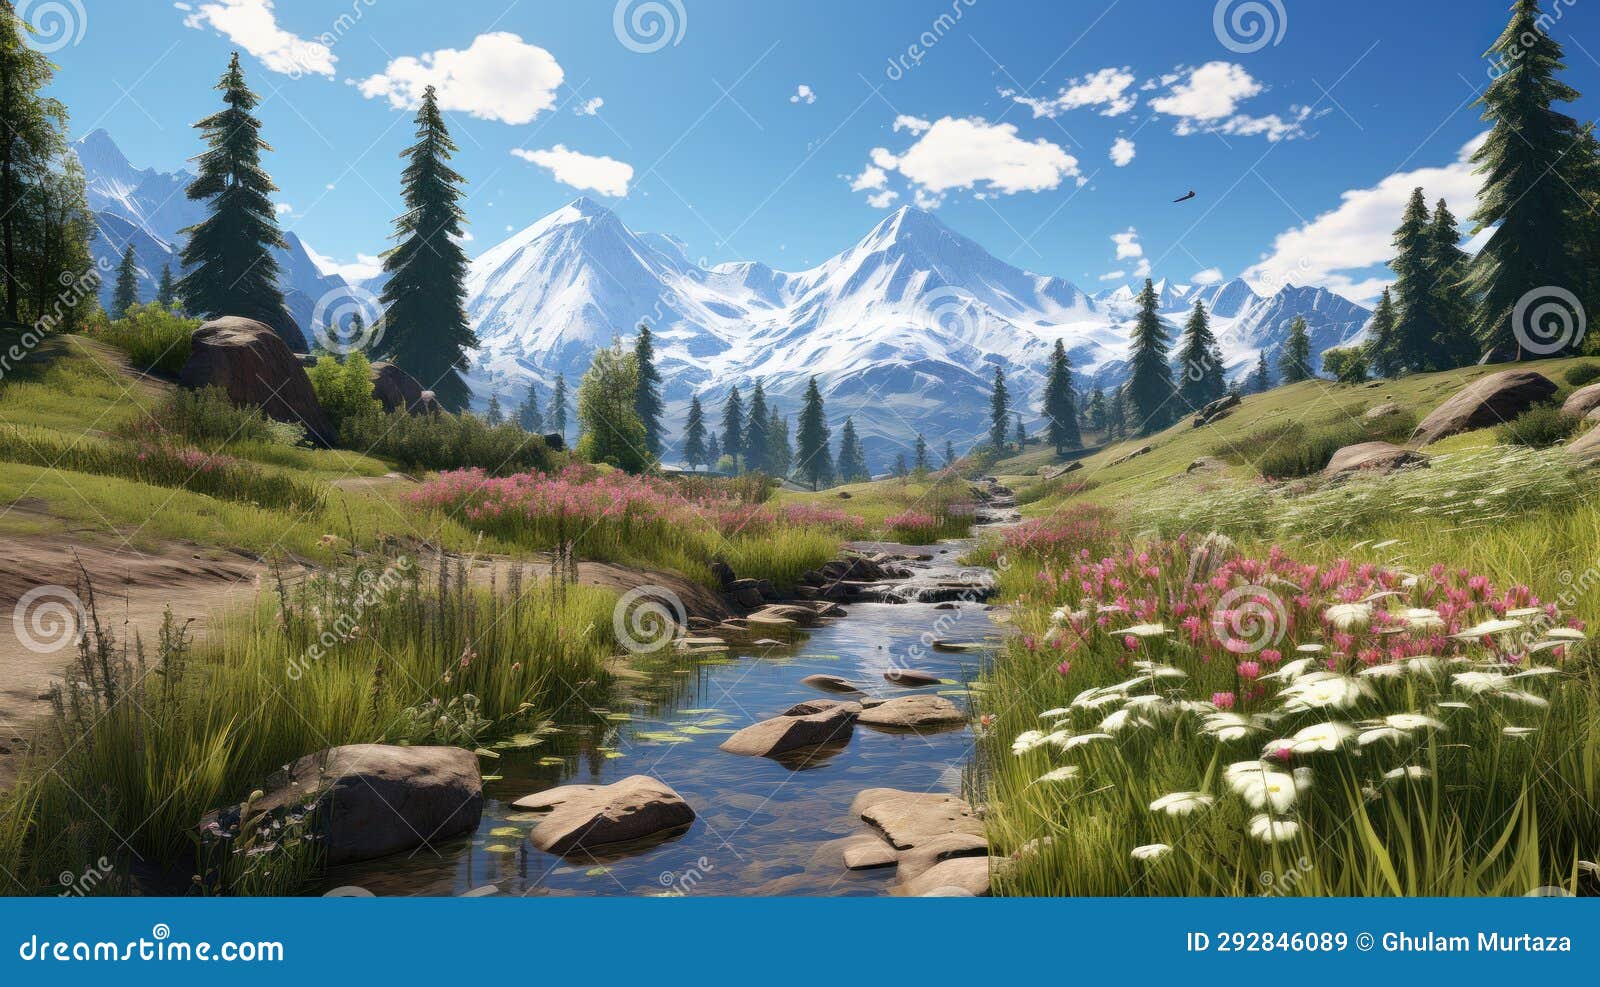 A Pixel Art Rendering of a Digital Mountain Range .UHD Wallpaper Stock ...